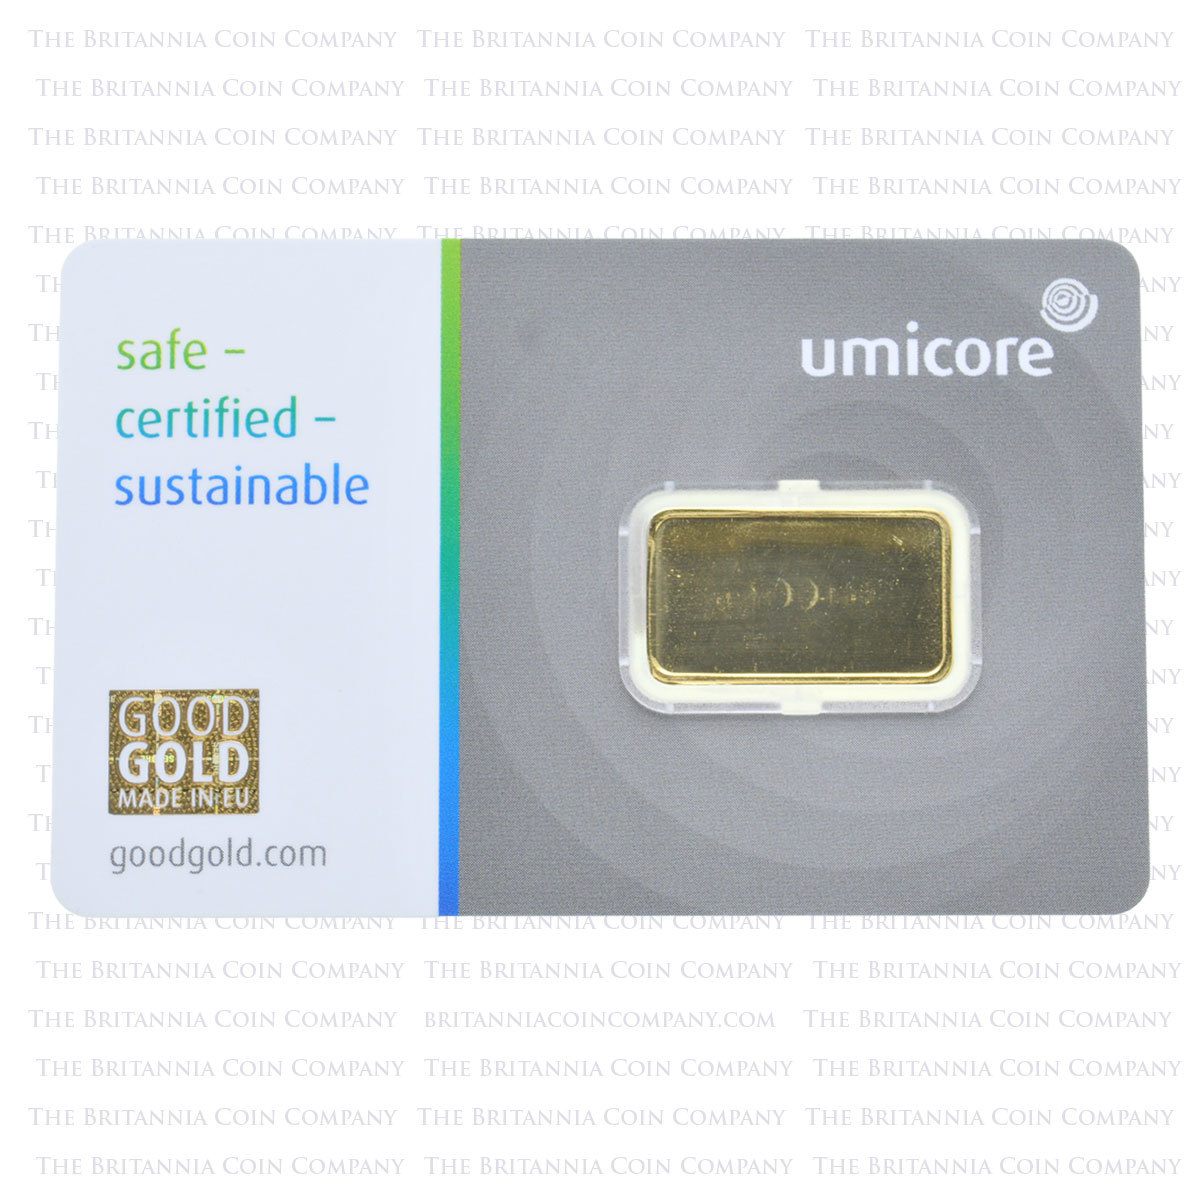 Umicore 2.5g Gold Bar